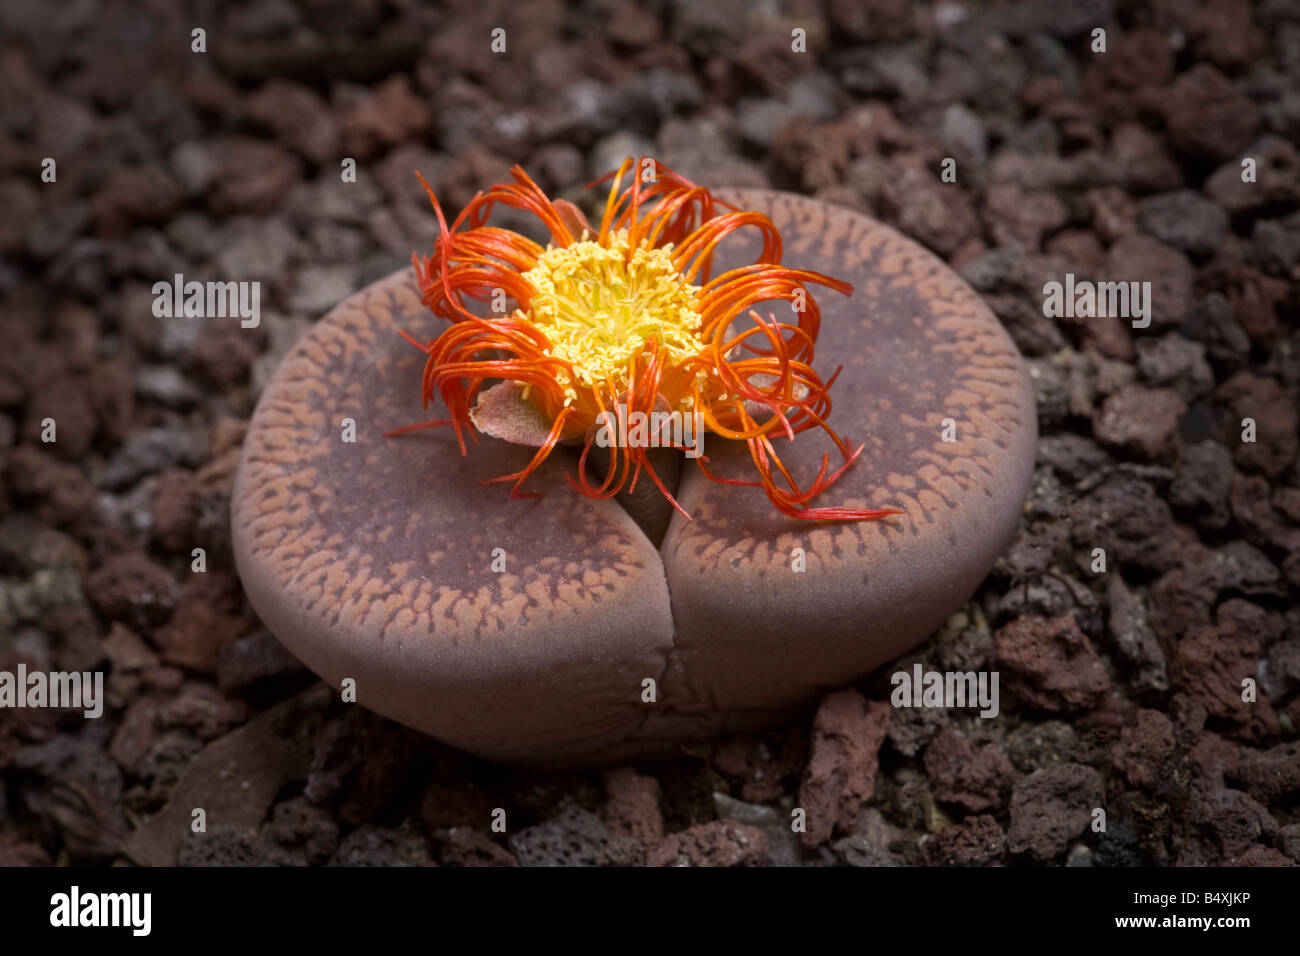 A Flowering stone (Lithops aucampiae) in its late flowering. Plante caillou (Lithops aucampiae) en fleur (fin de floraison). Stock Photo